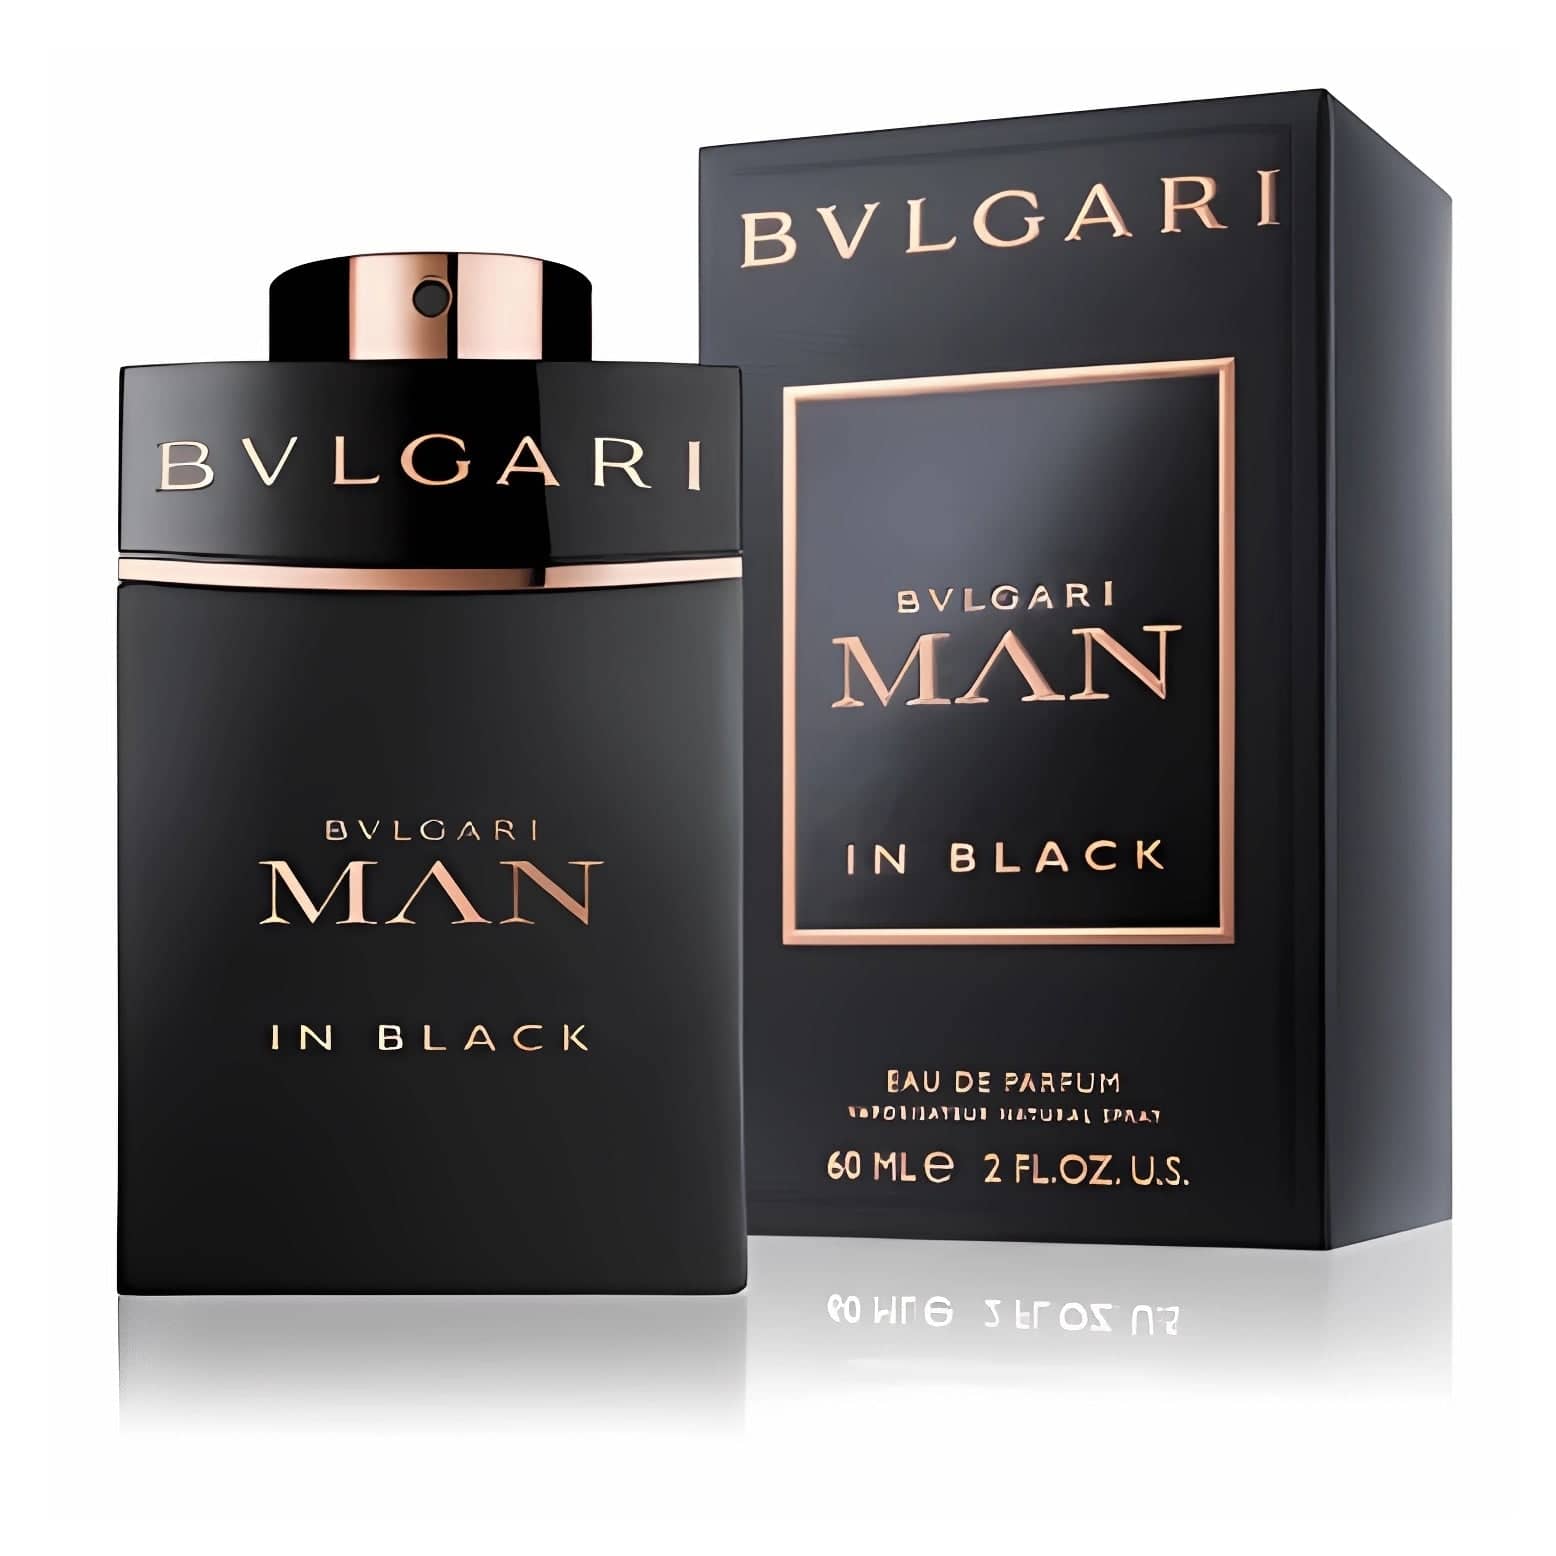 BVLGARI MAN IN BLACK Eau de Parfum Eau de Parfum BVLGARI   